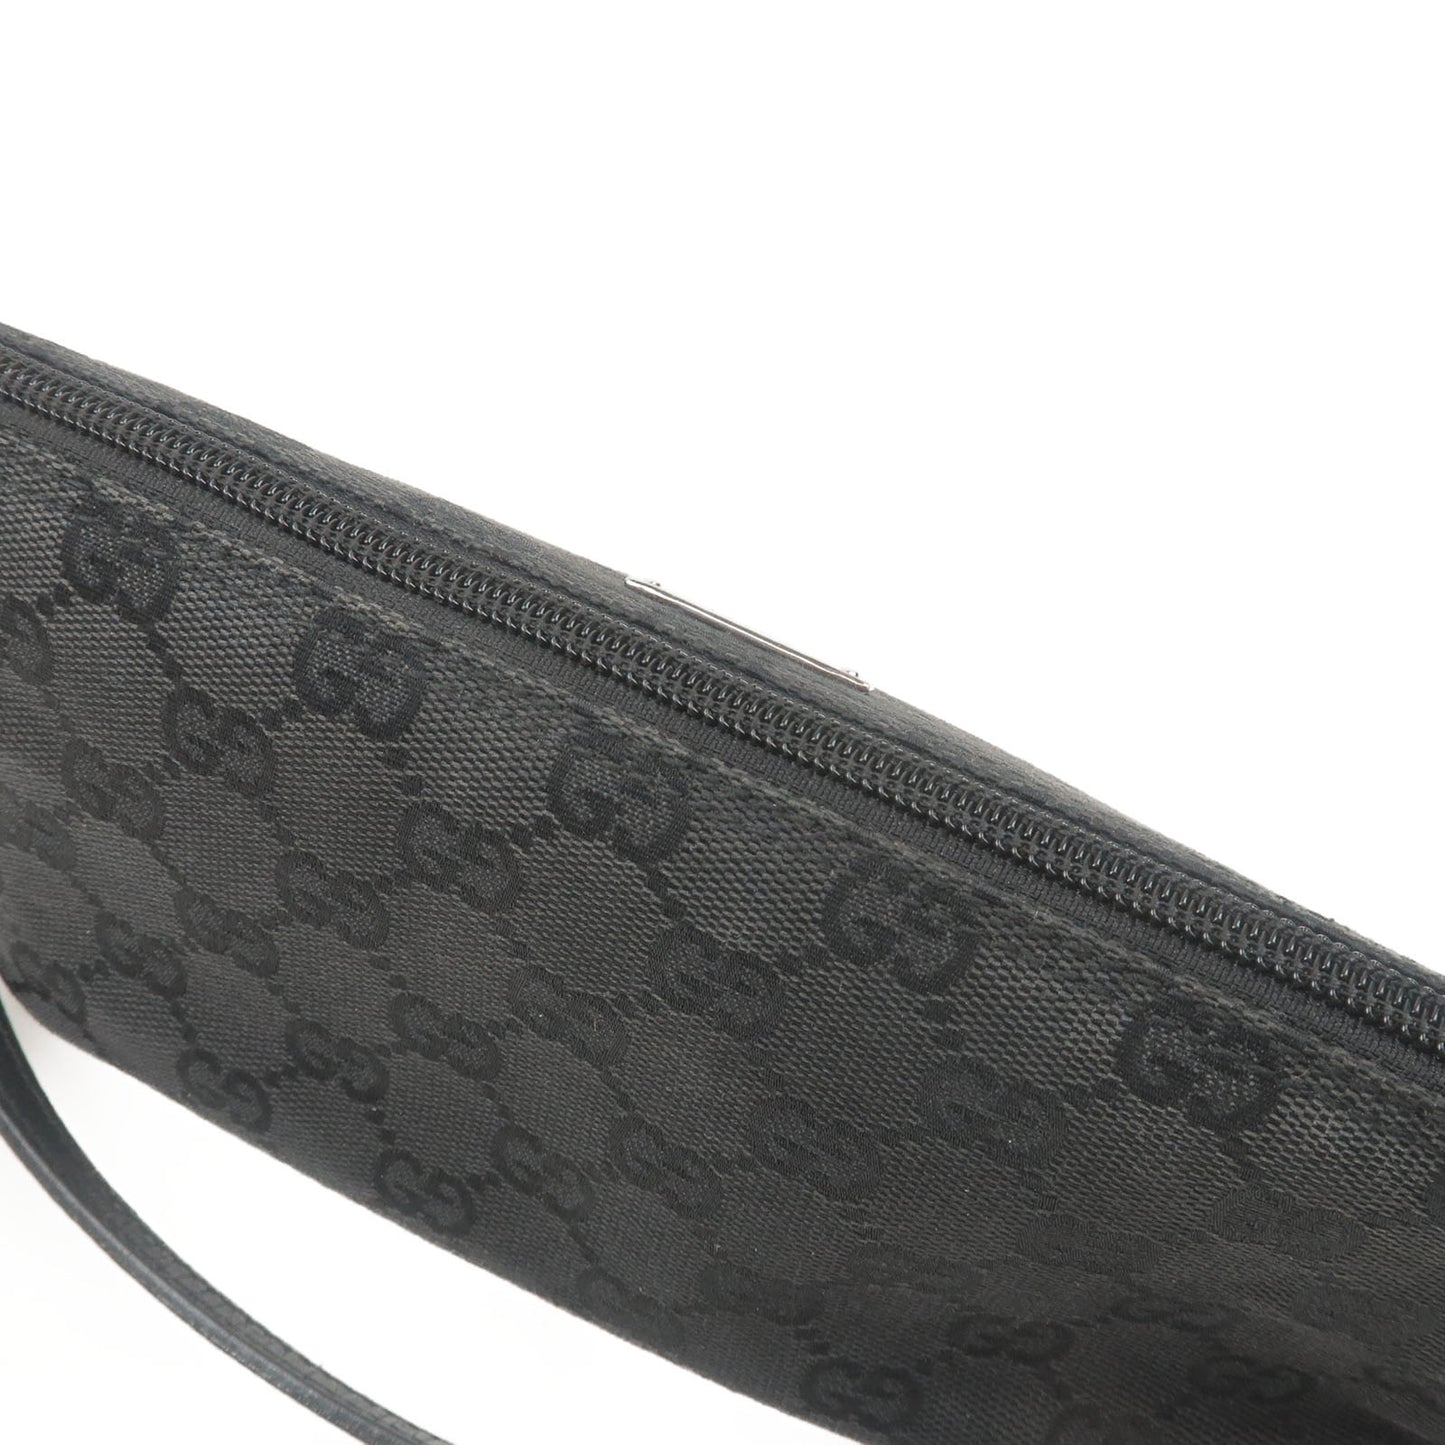 GUCCI-GG-Canvas-Leather-Shoulder-Bag-Pink-Beige-001.3386 – dct-ep_vintage  luxury Store